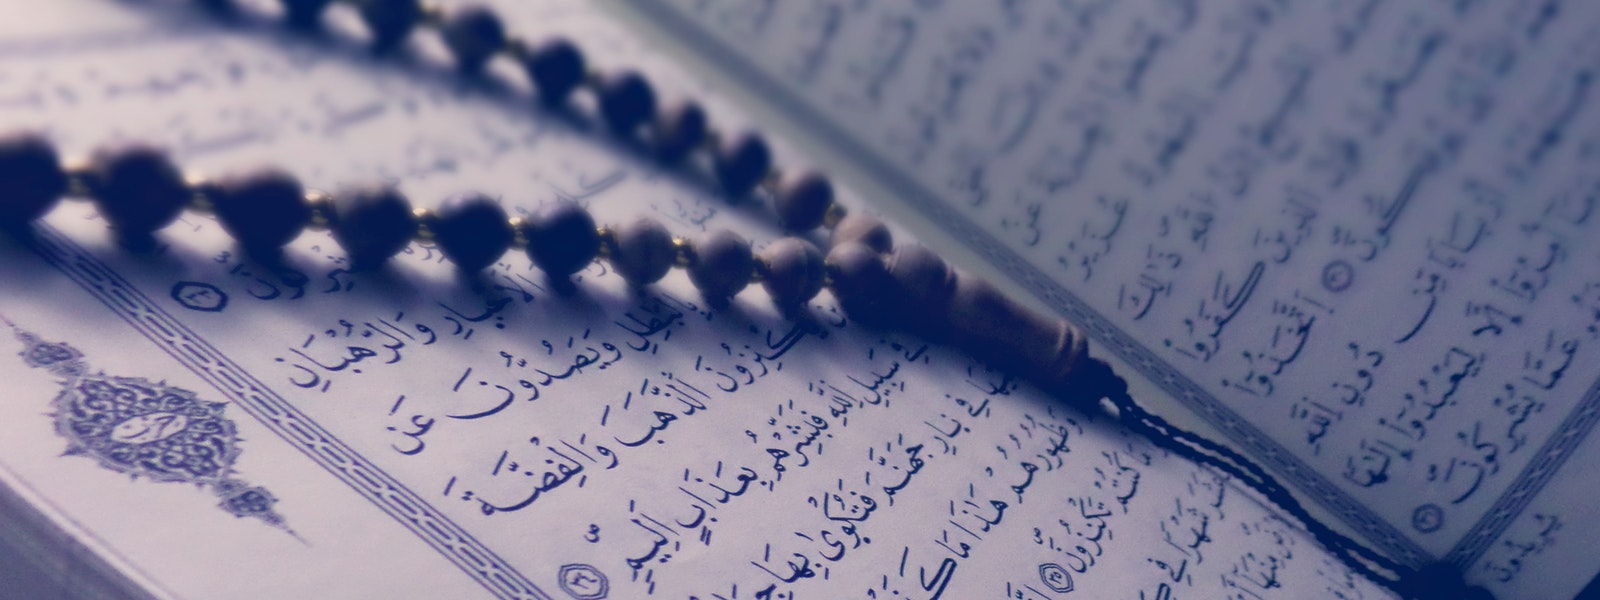 Quran books